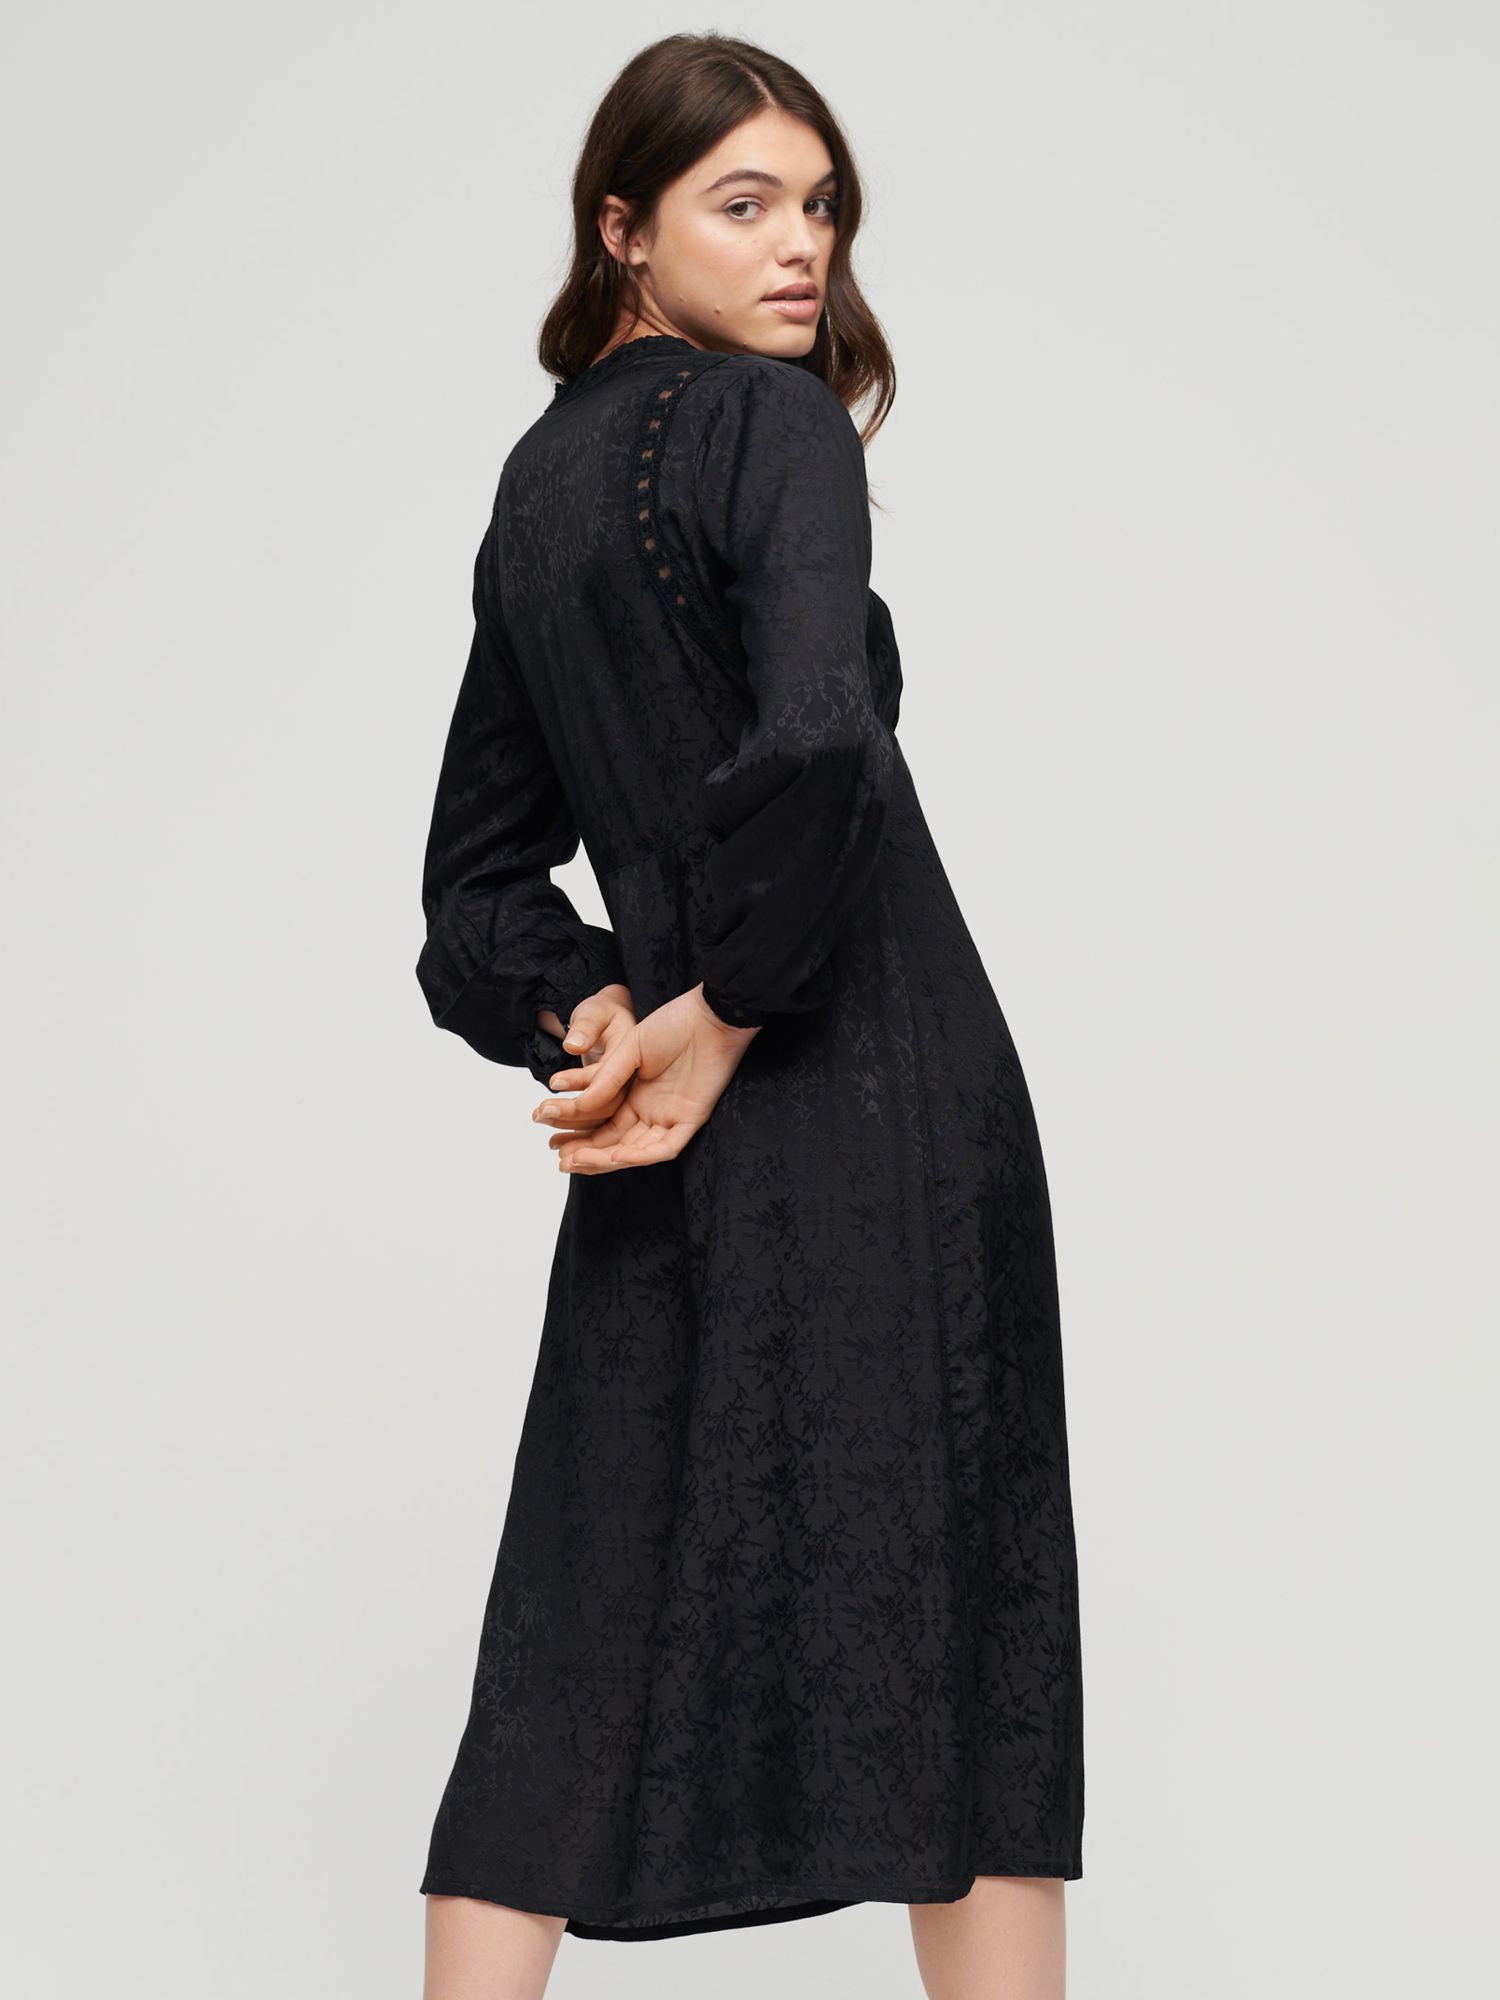 Superdry Lace Trim Midi Dress, Urban Black at John Lewis & Partners